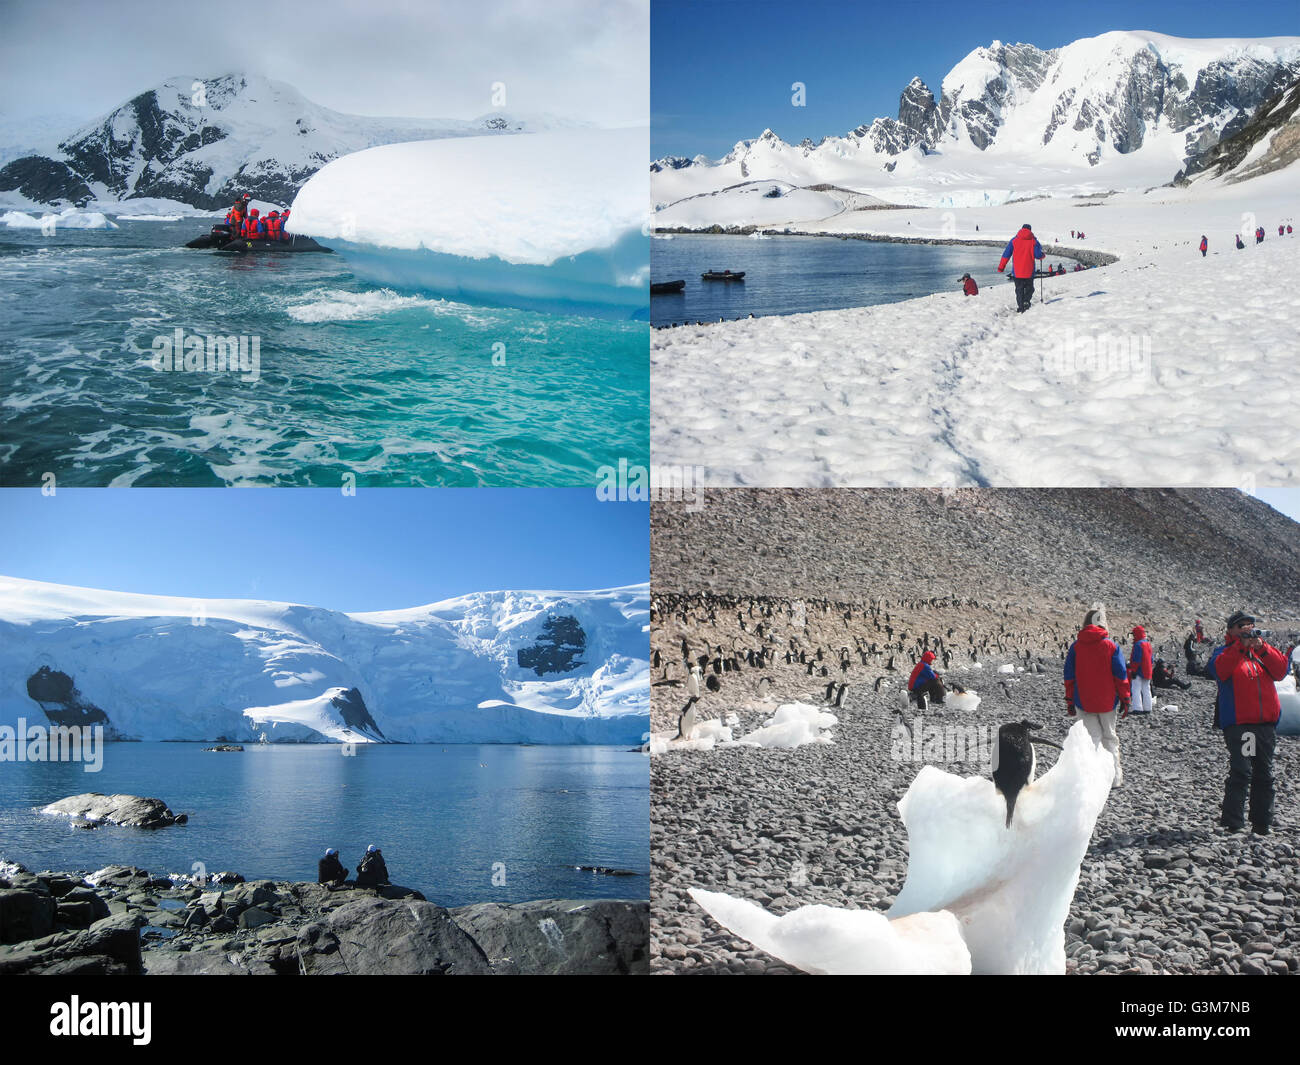 Cruise passengers enjoying spending time amongst the wildlife and stunning scenery of Antarctica. Stock Photo